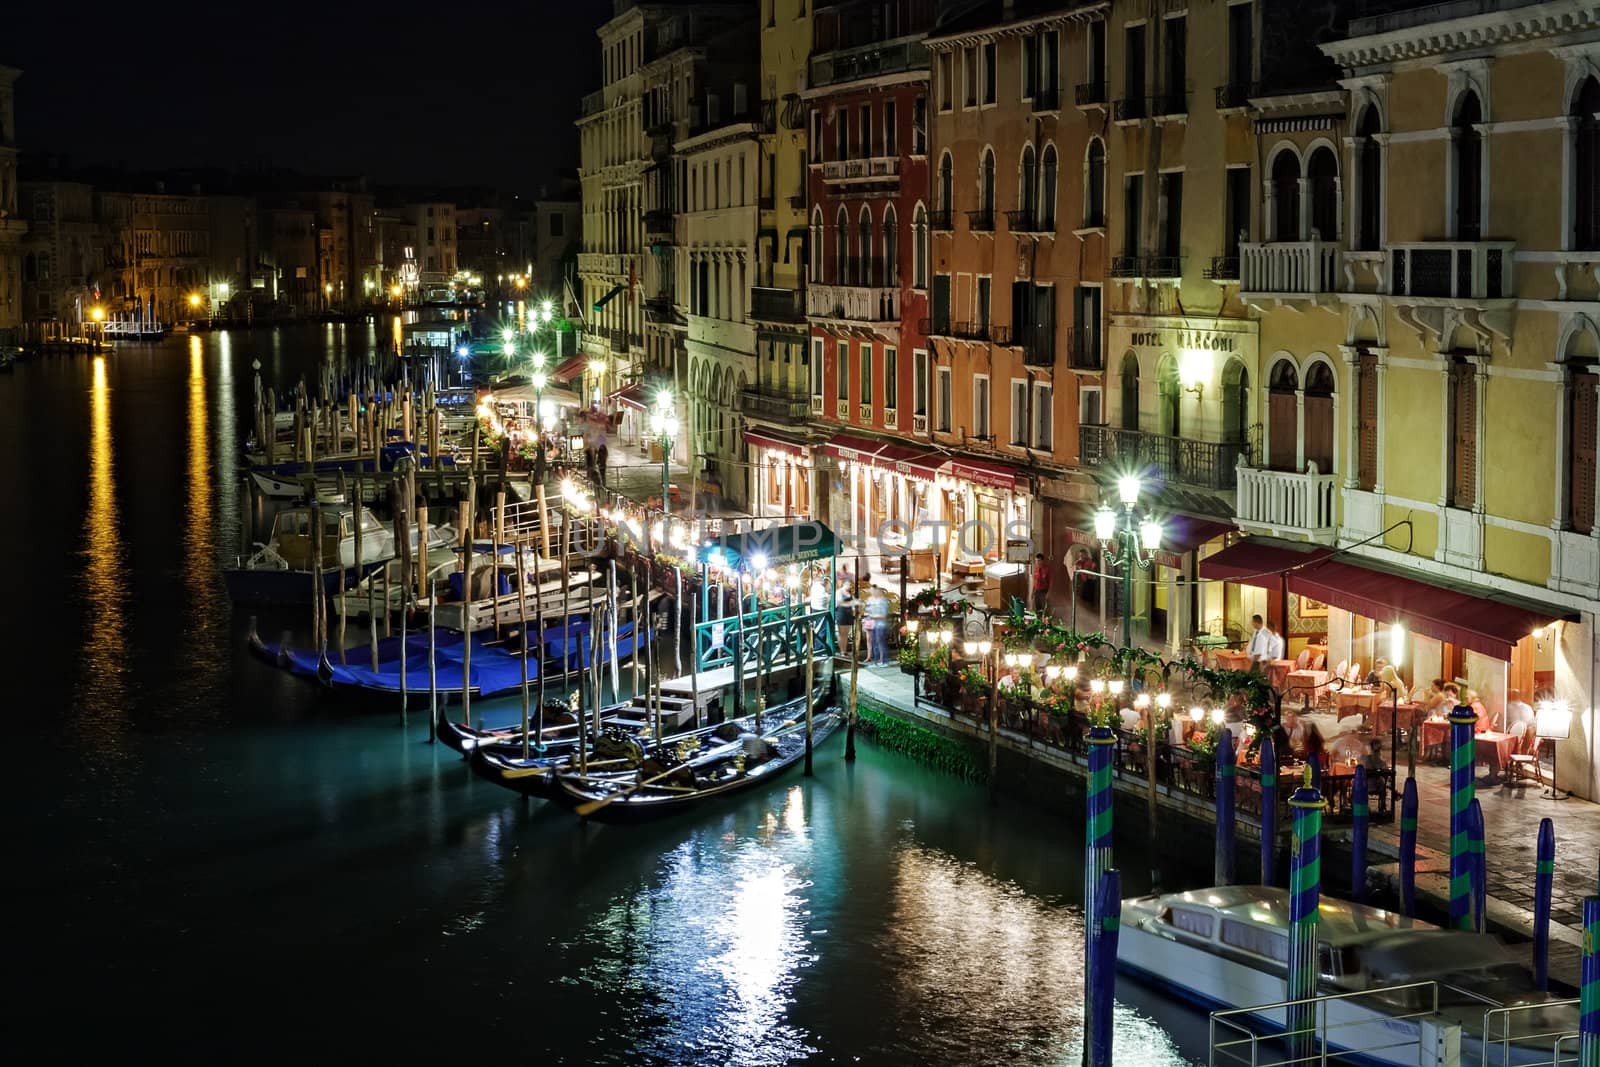 Grand Canal at night, Venice by Roka